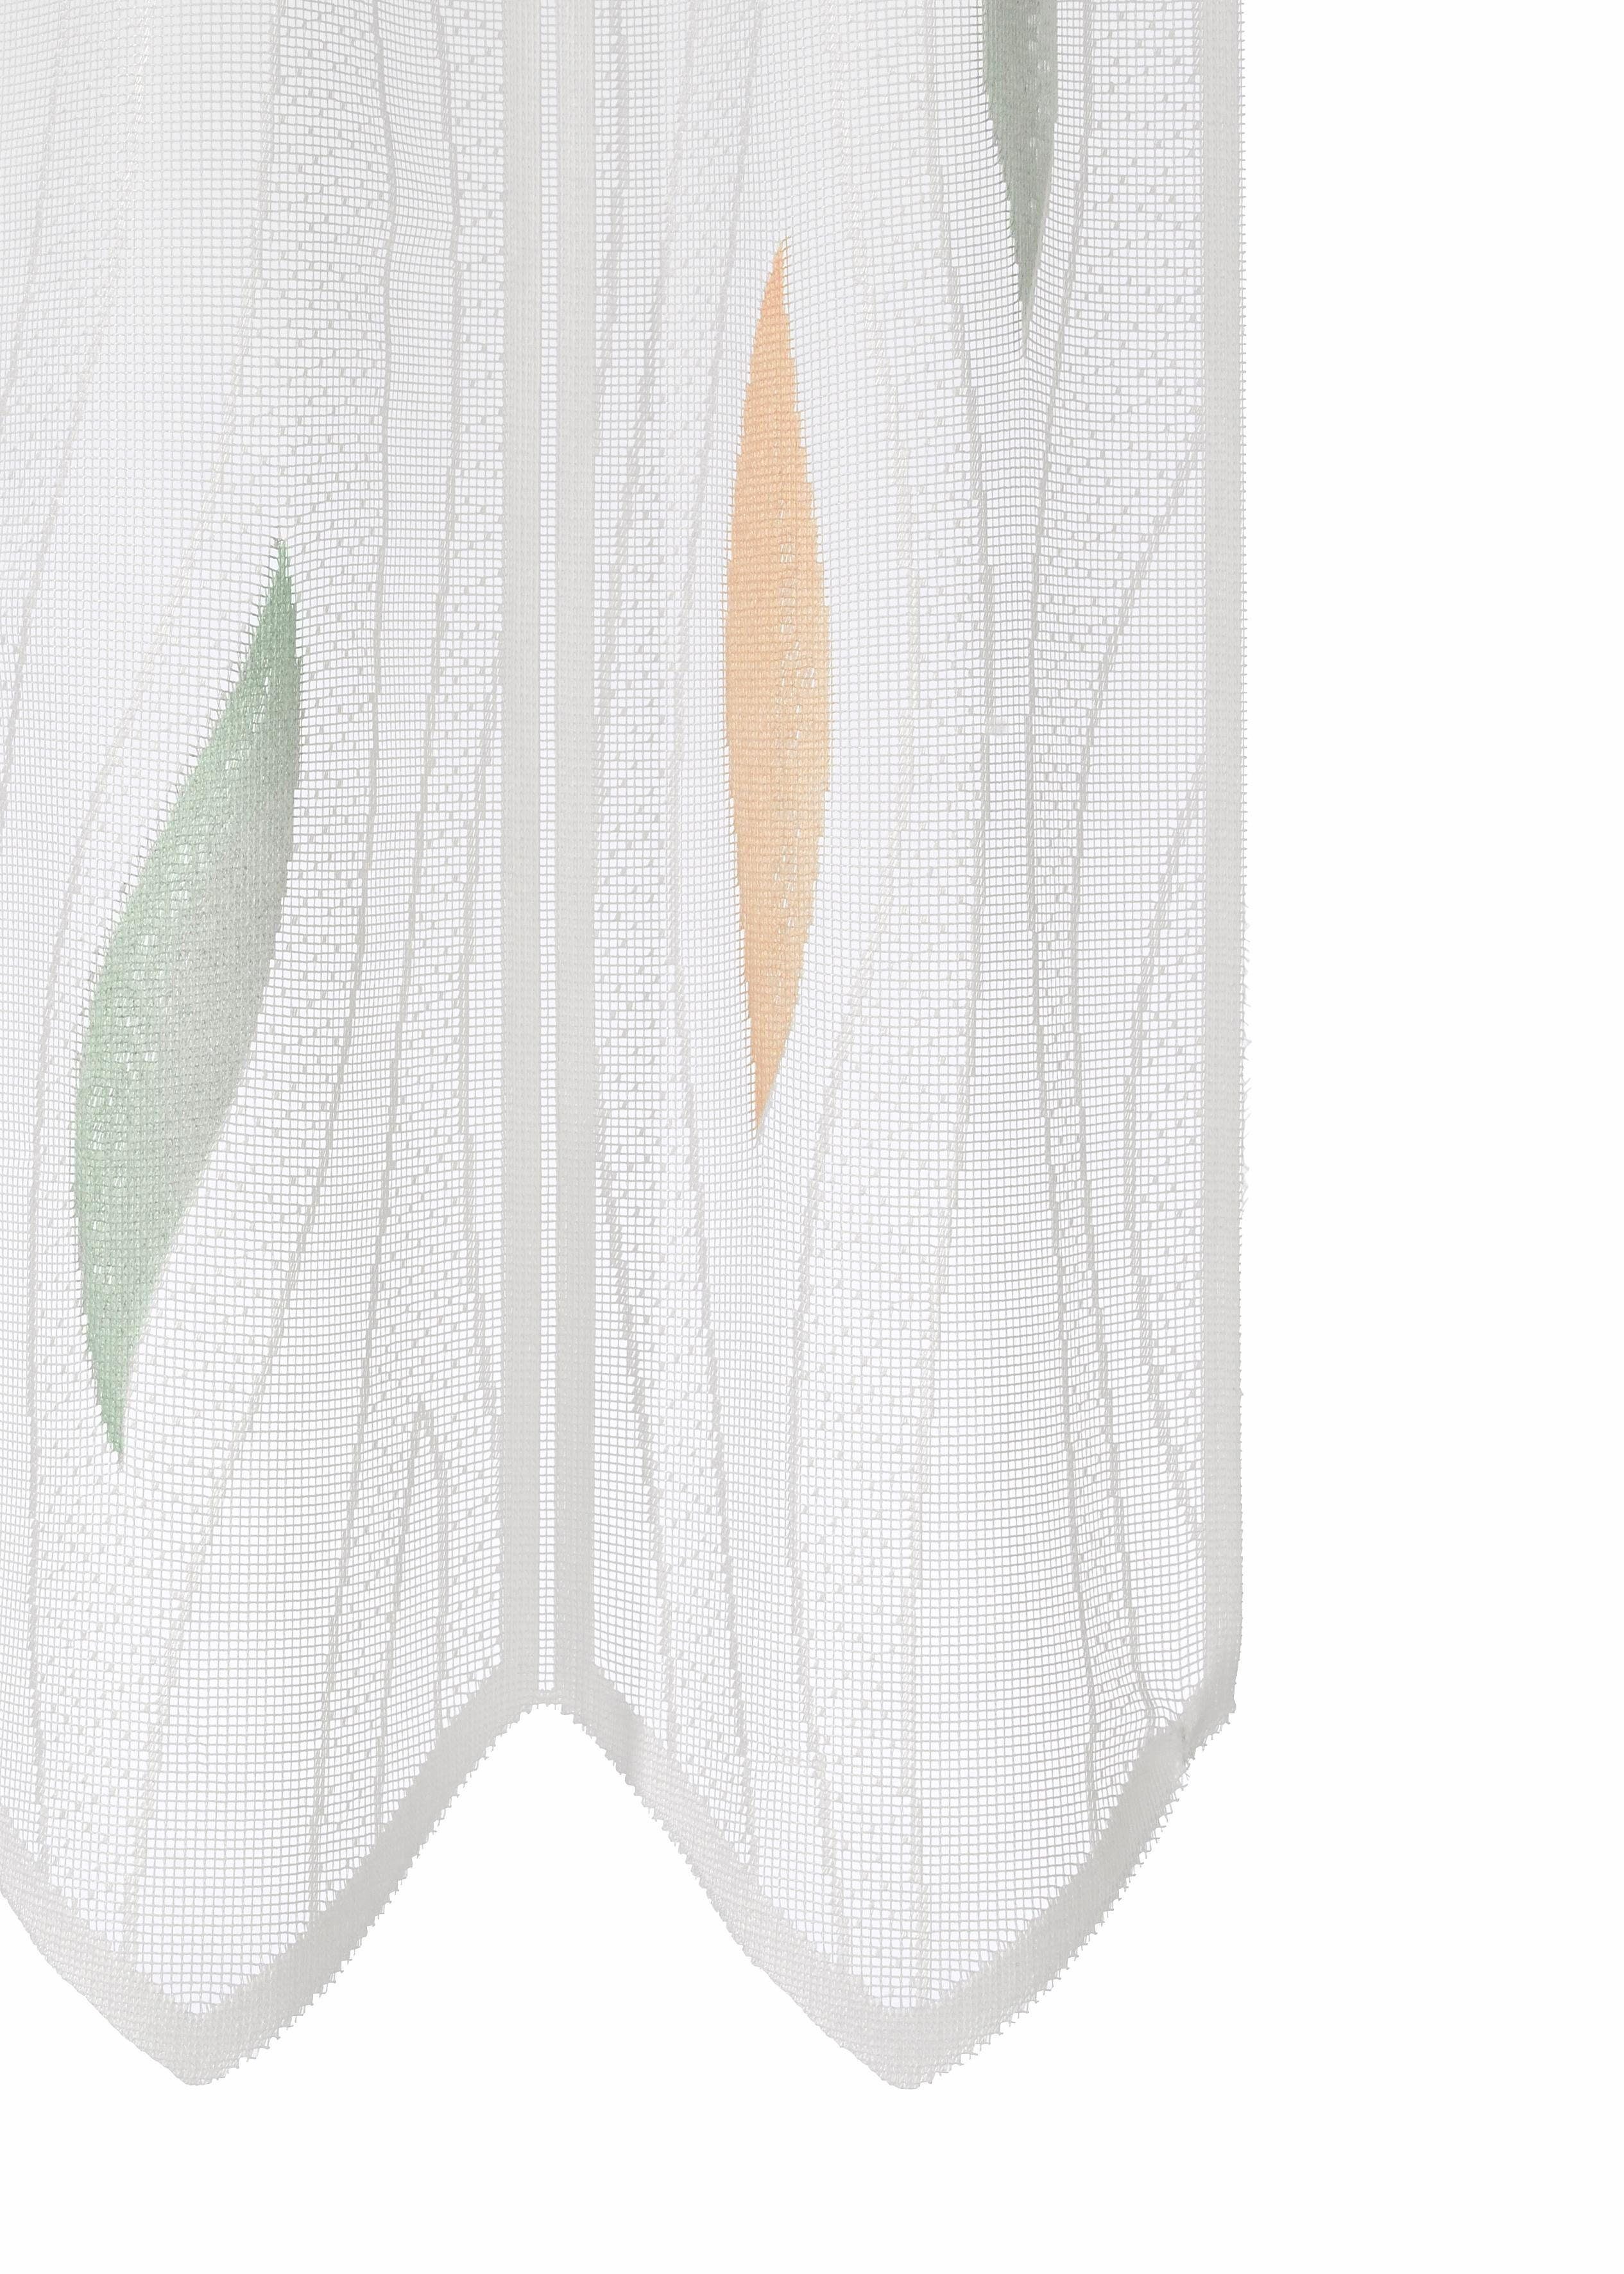 Scheibengardine Mathilda, VHG, Stangendurchzug transparent, grün/weiß/apricot Jacquard (1 St)